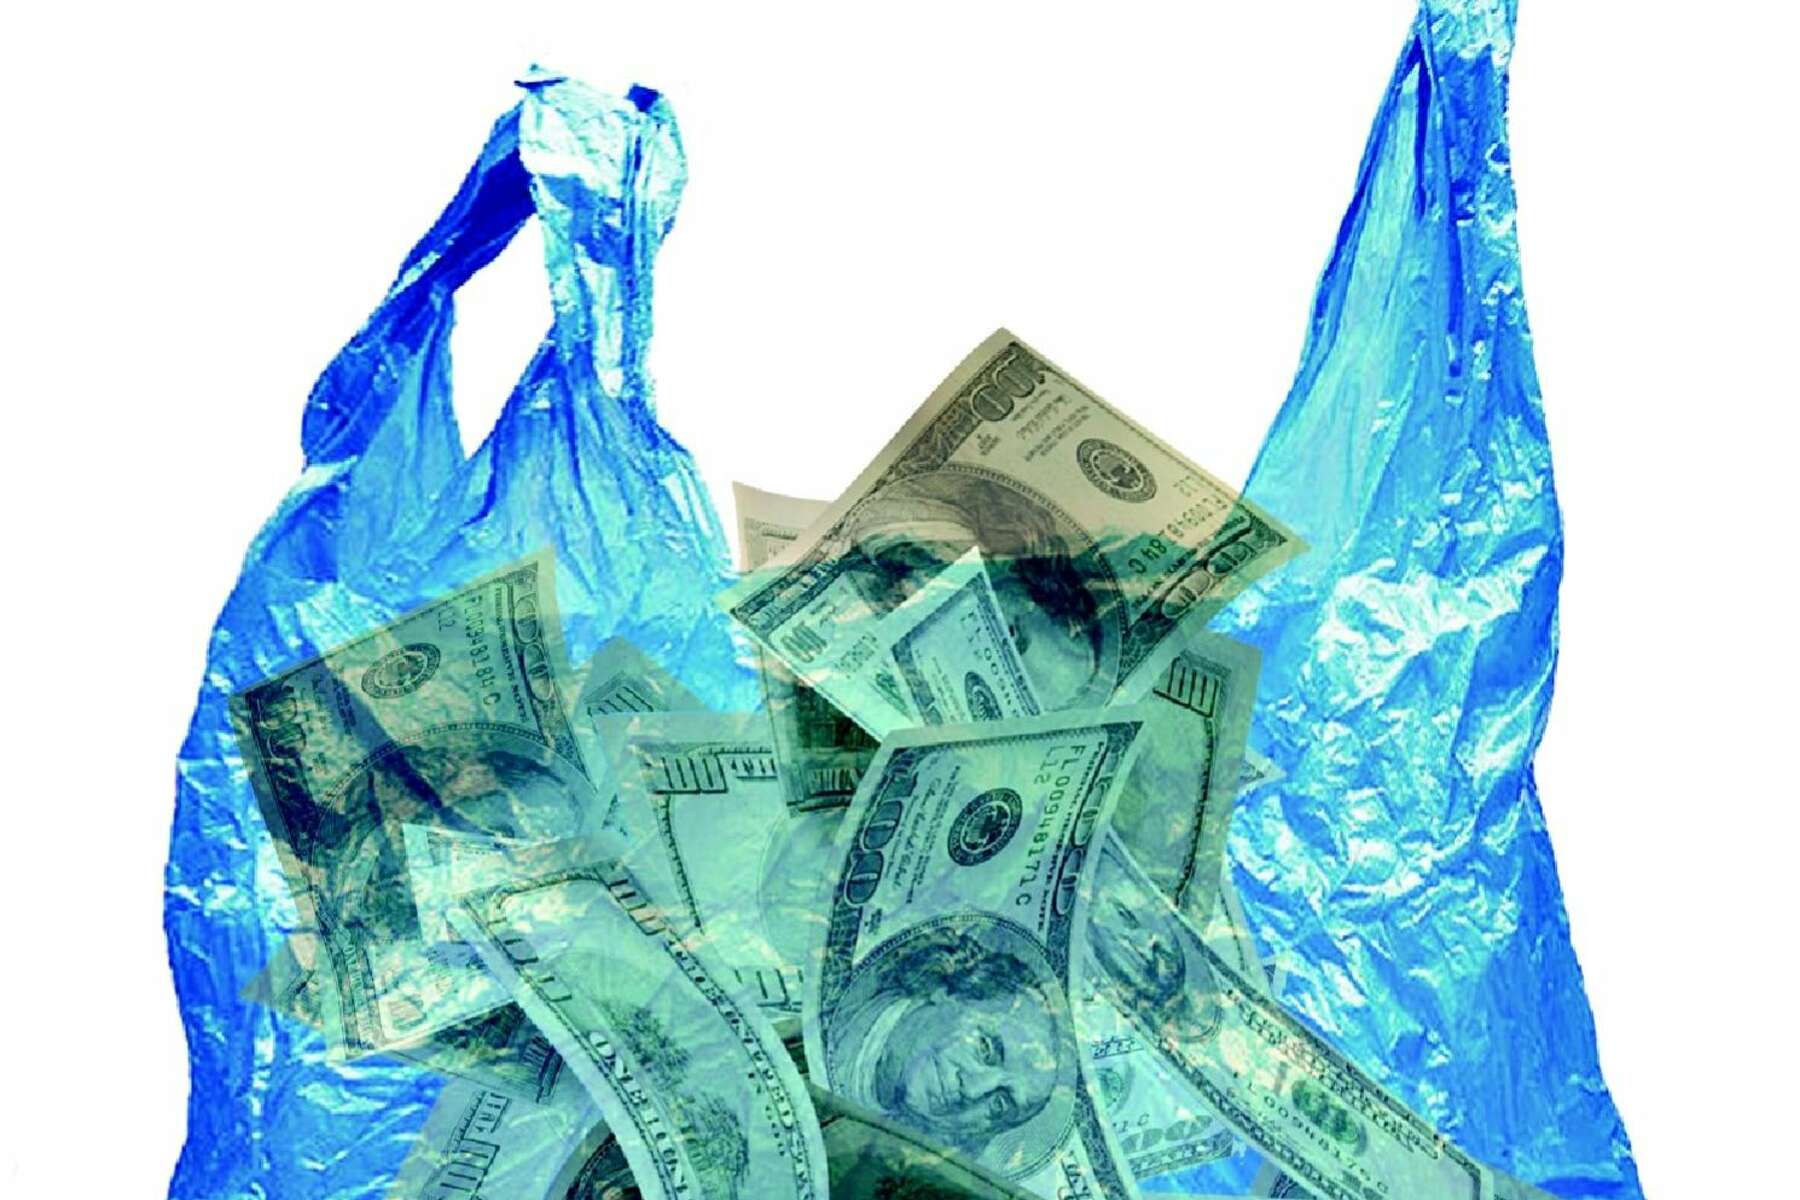 Plastic bag ban could mean sacks of cash for grocers